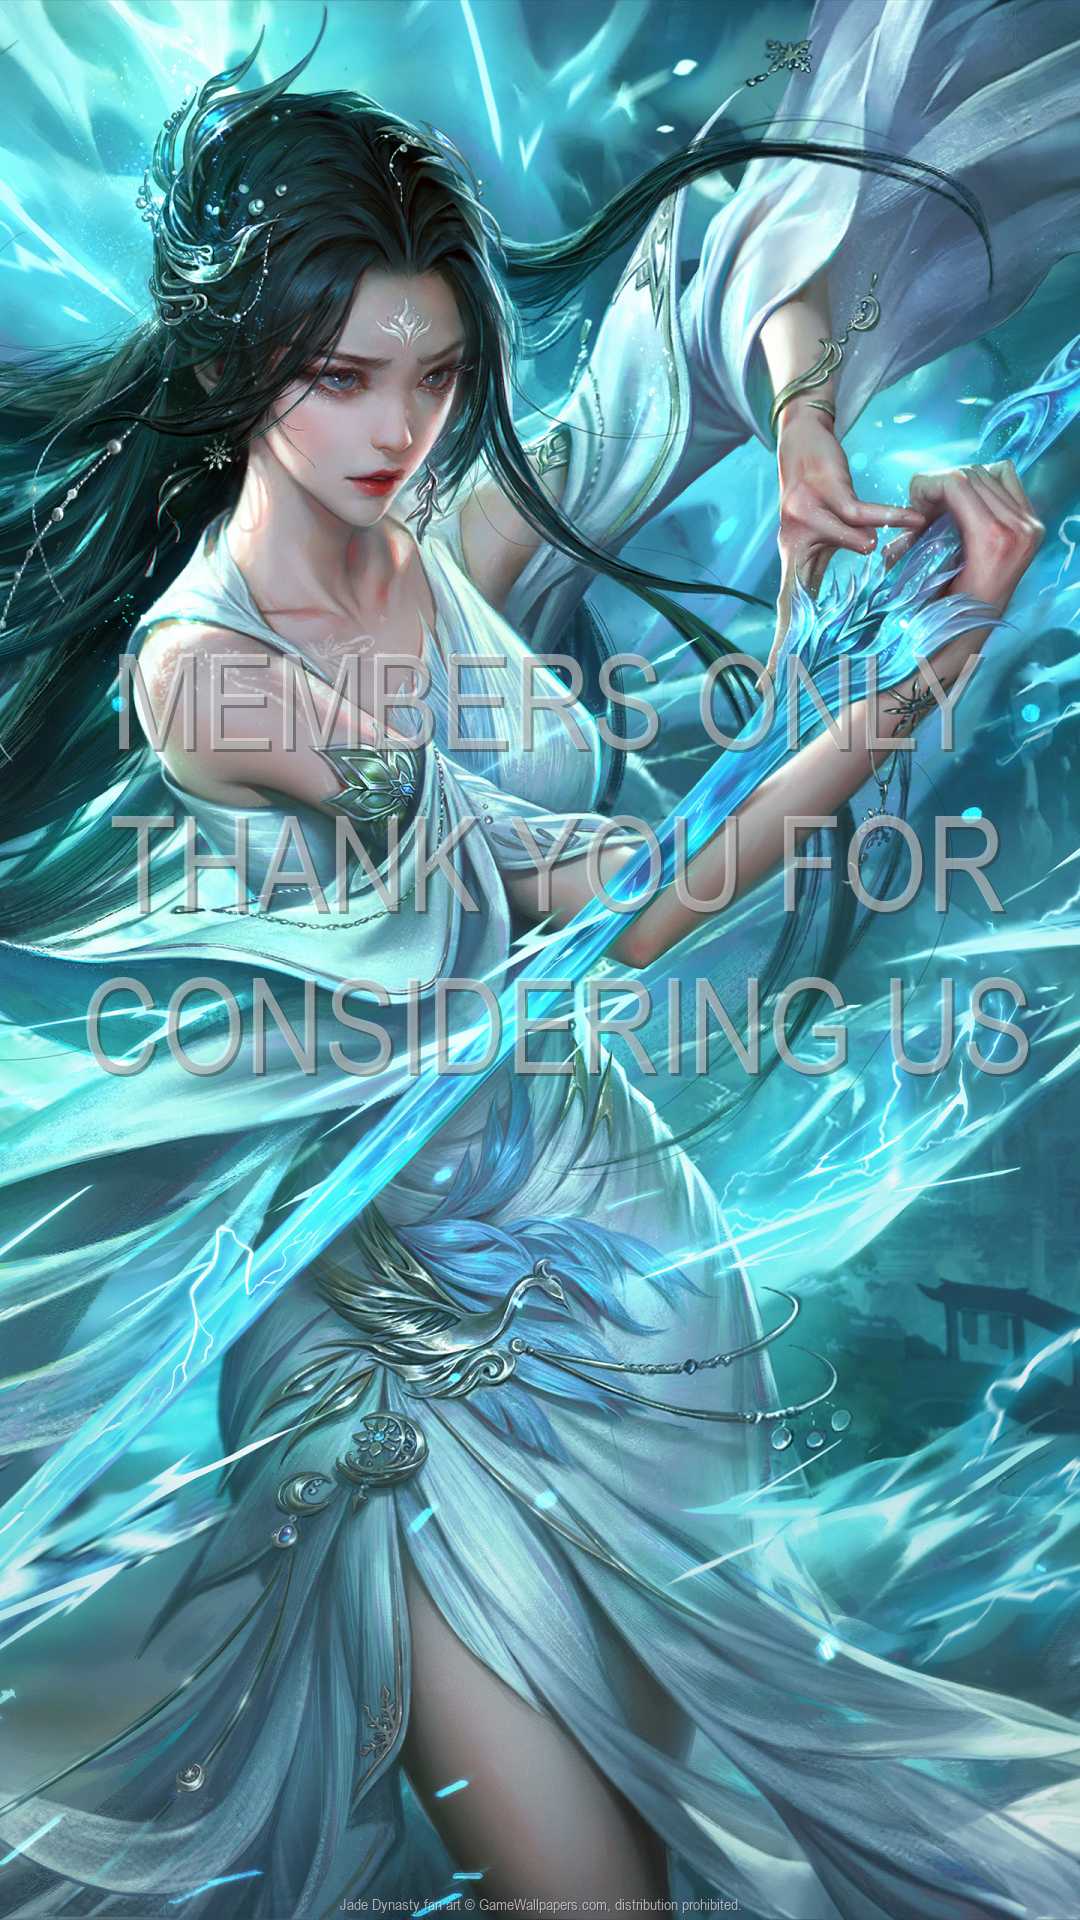 Jade Dynasty fan art 1080p Vertical Mobile wallpaper or background 01